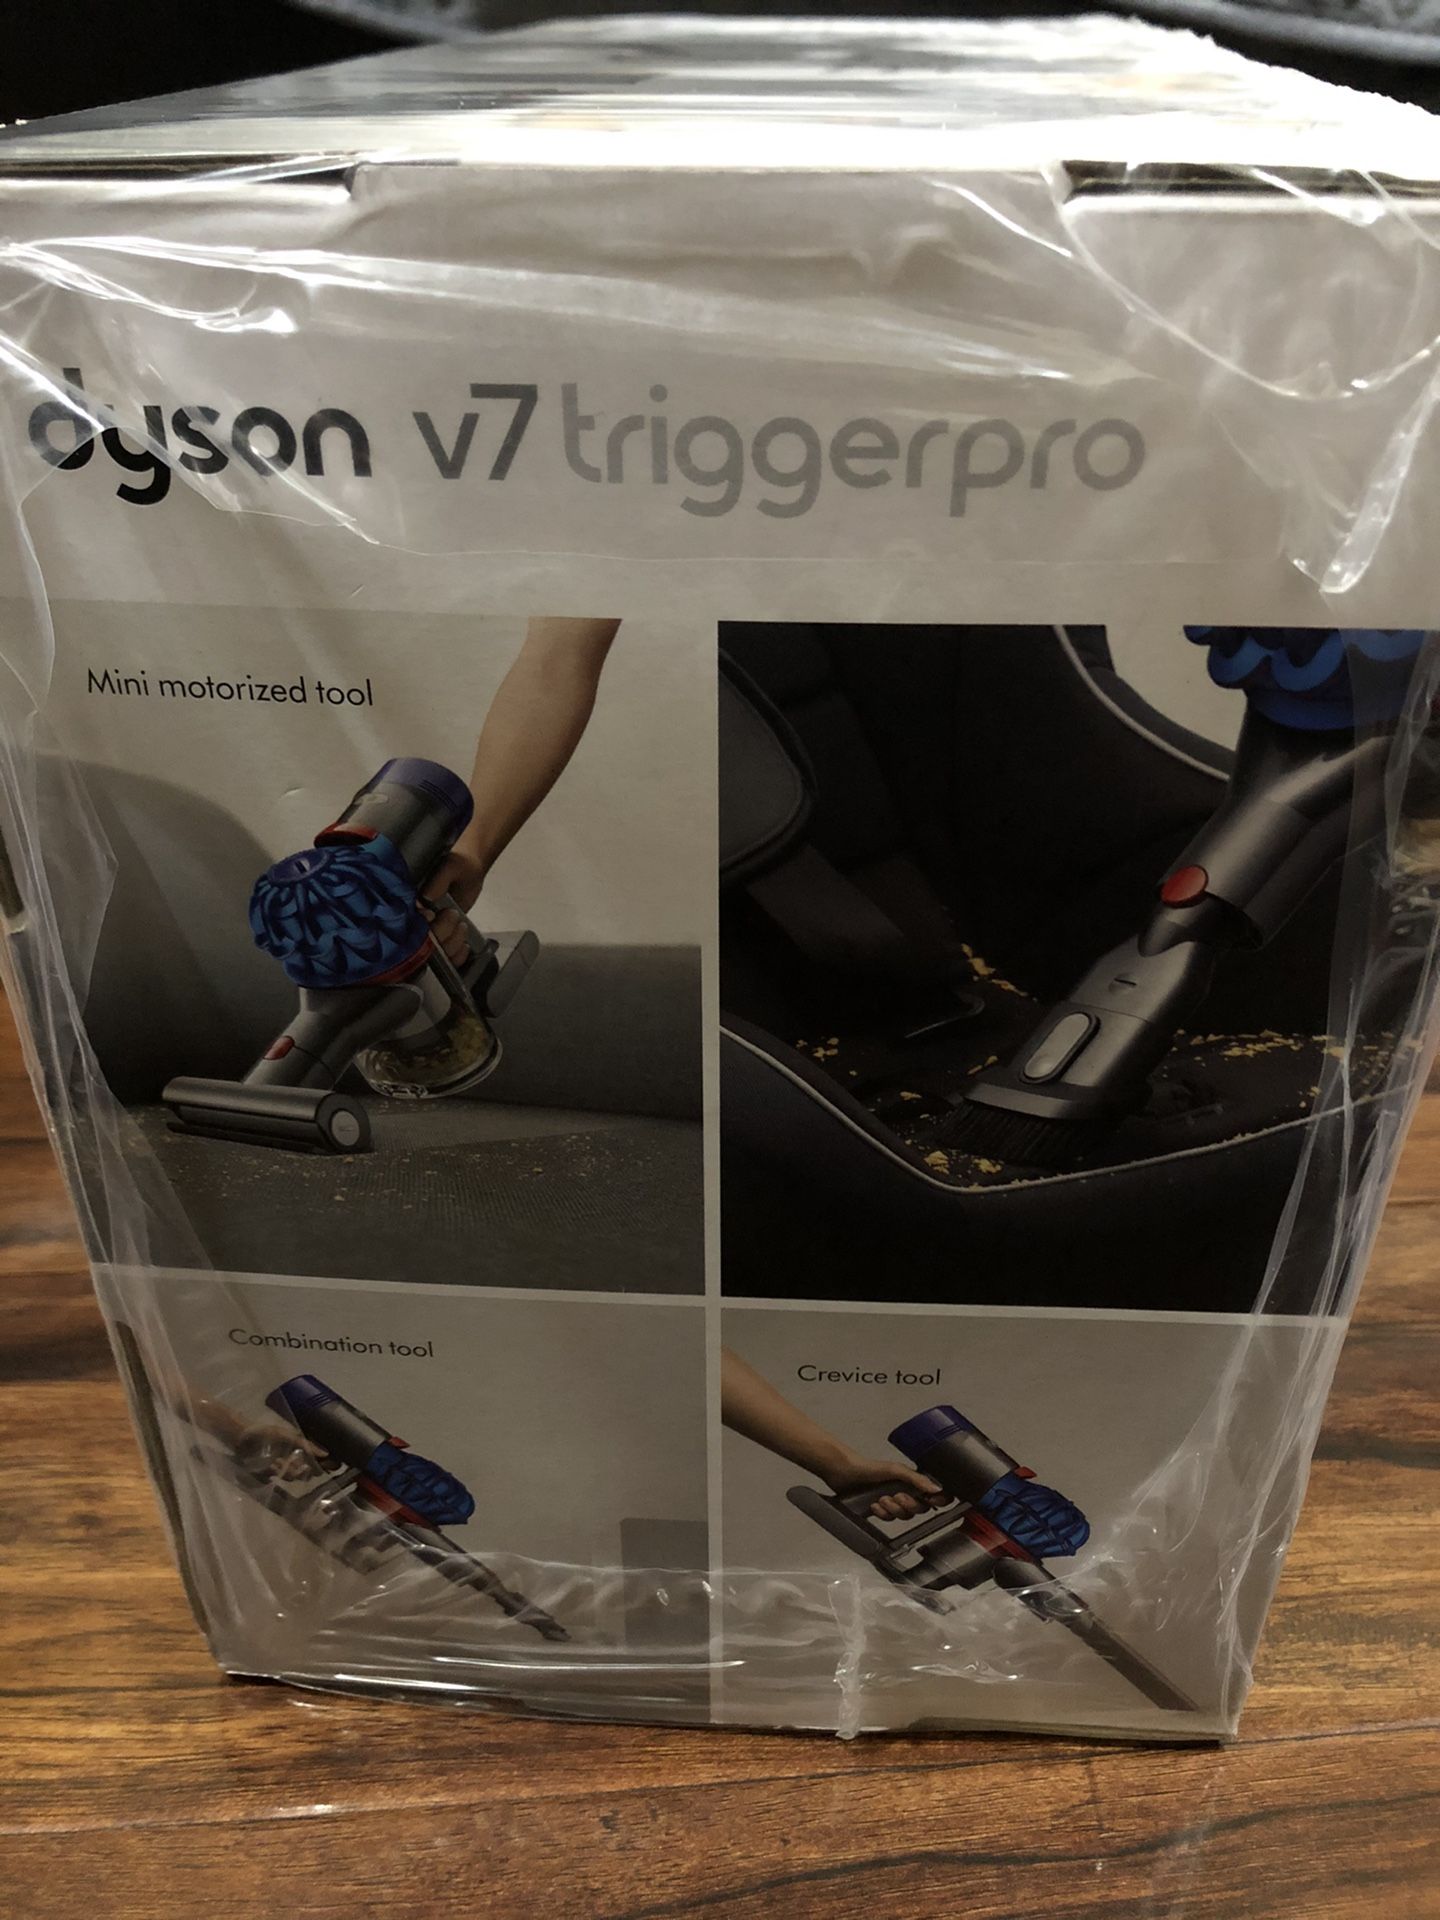 Dyson V7 trigger pro